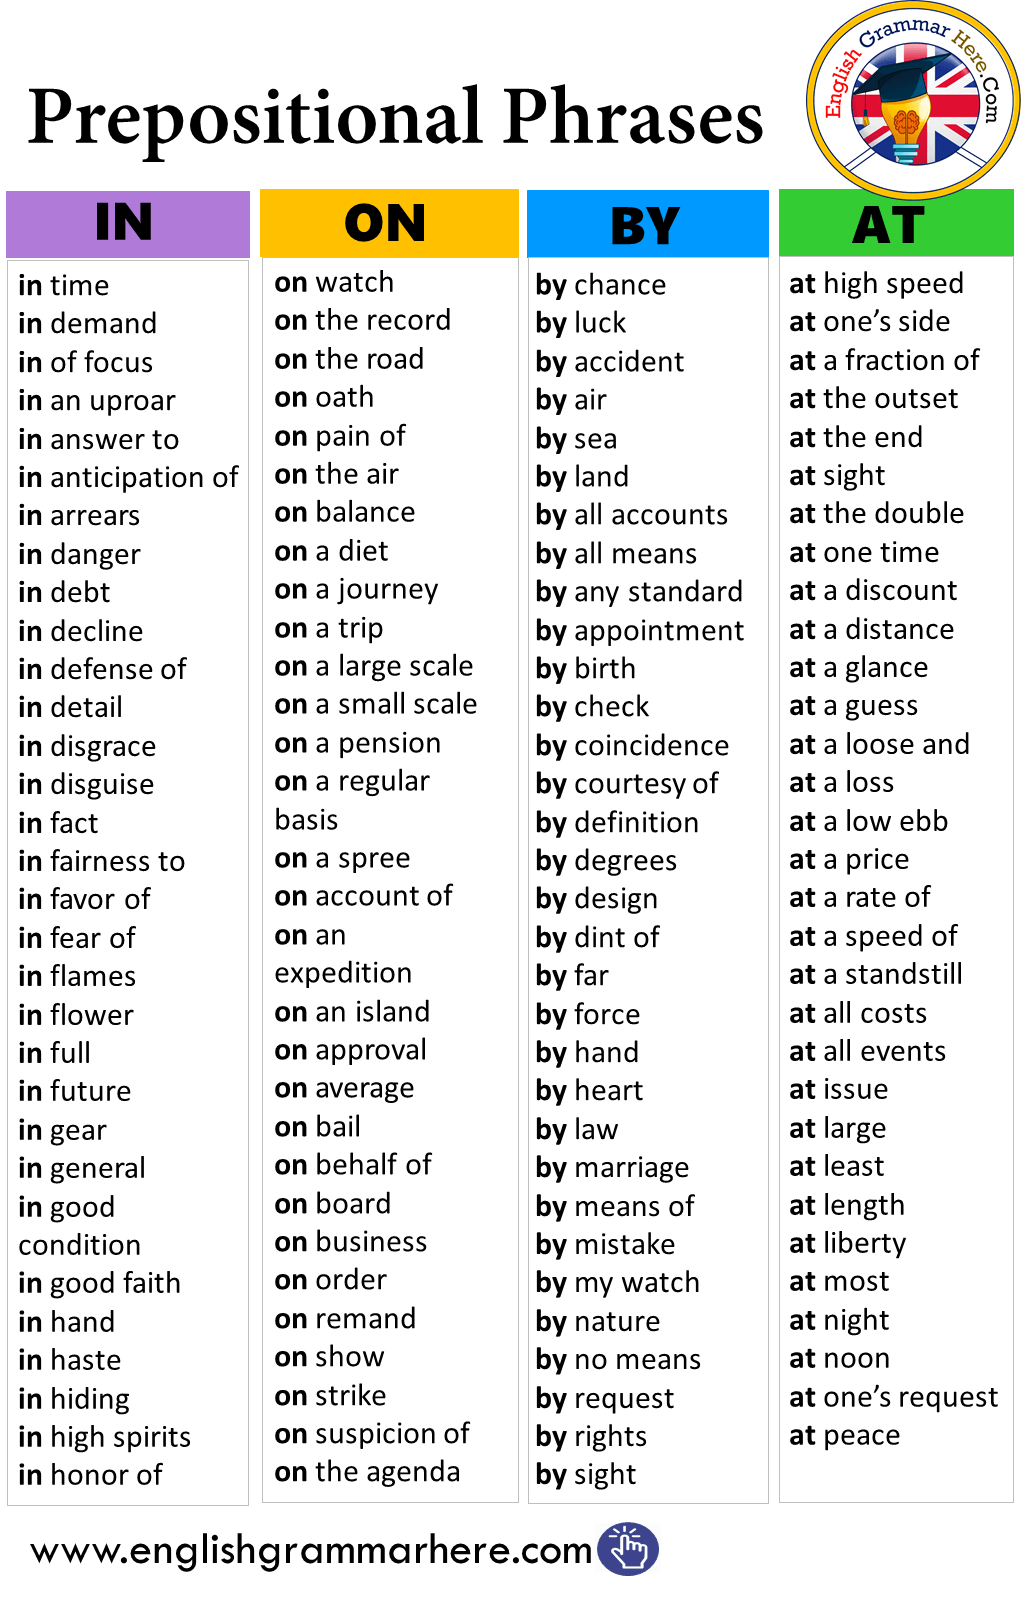 Prepositional Phrases List English Grammar Here